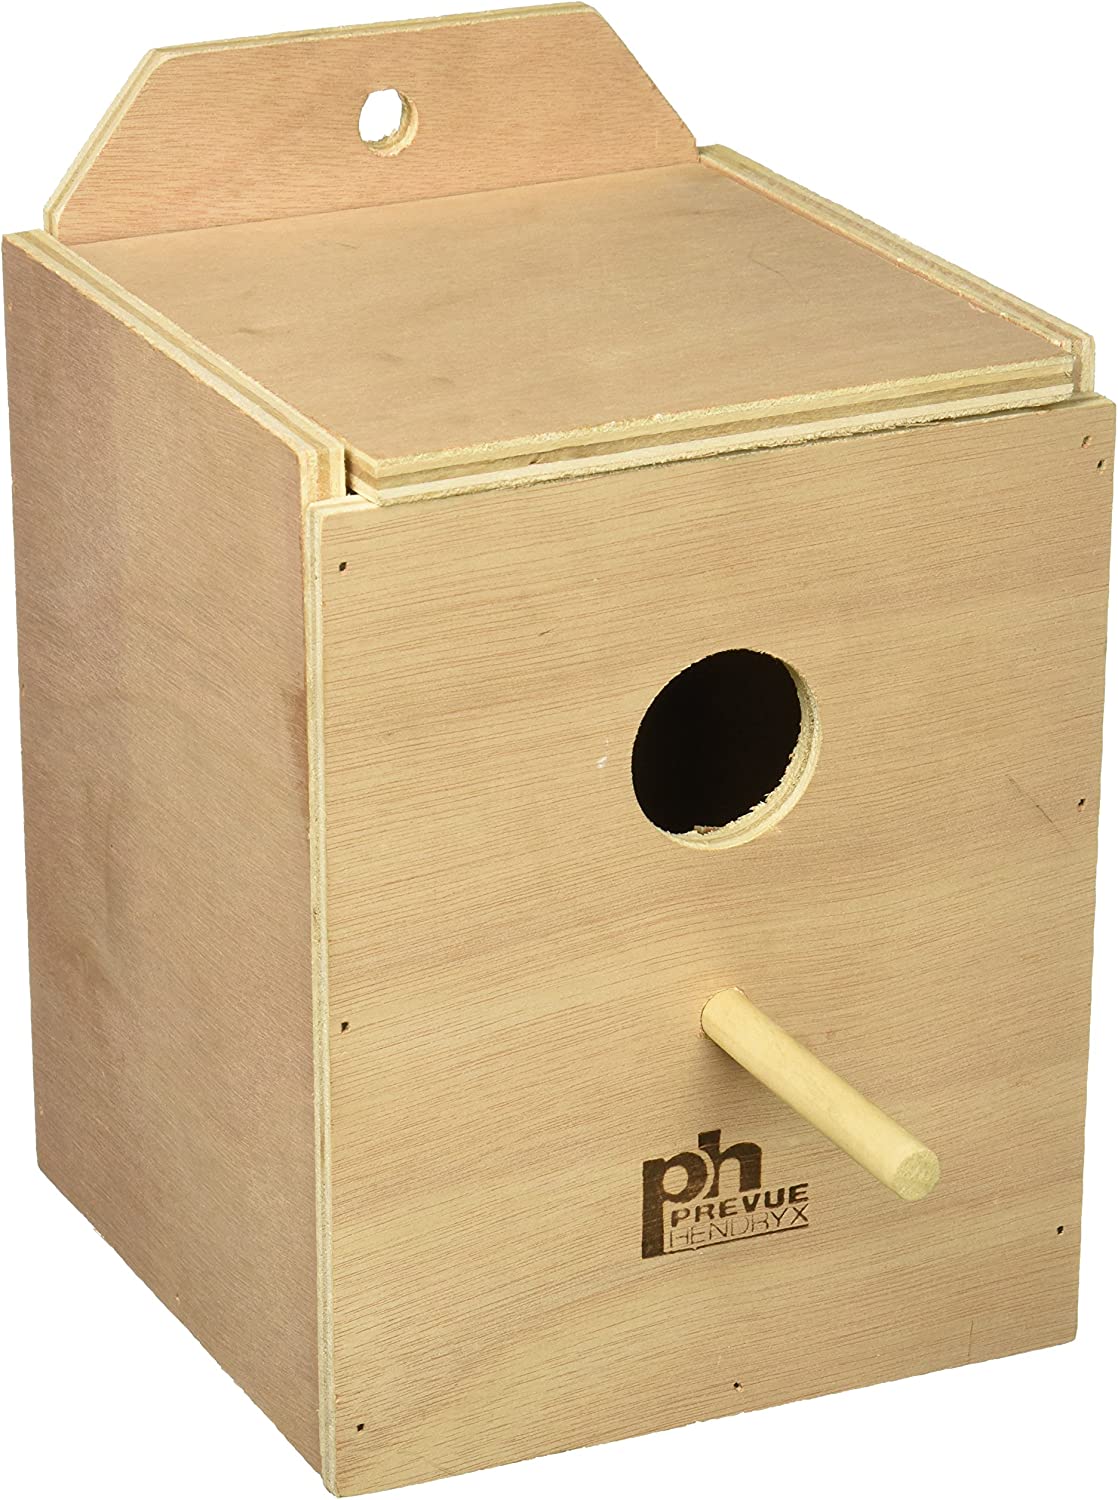 Prevue Pet Products BPV1102 Wood Inside Mount Nest Box for Birds, Lovebird